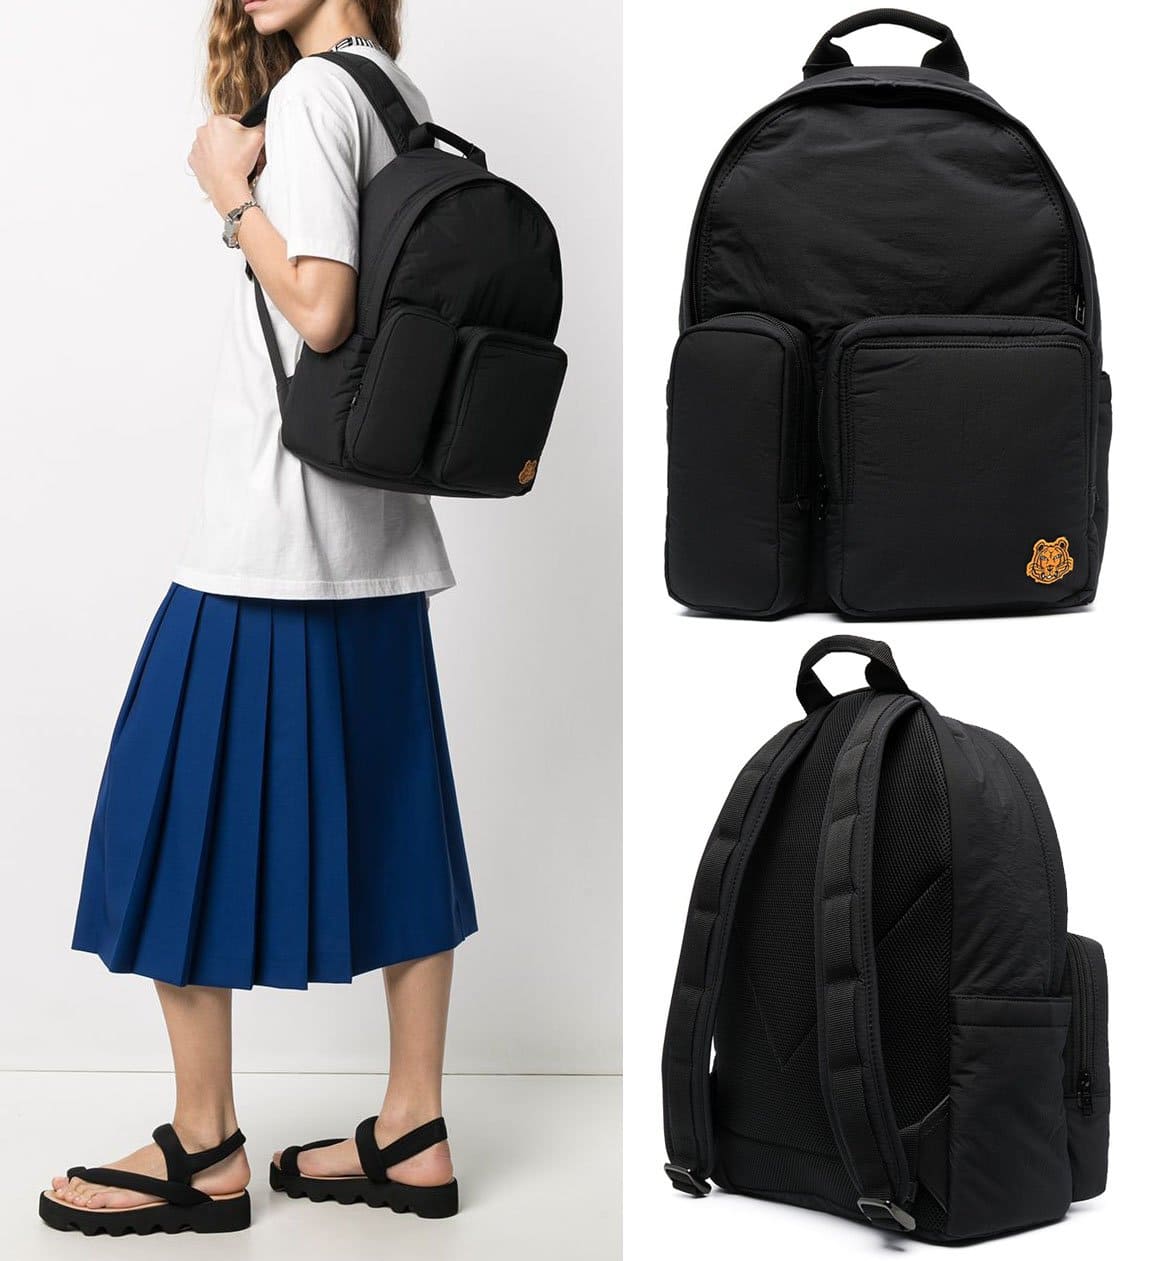 A minimalist black nylon bag that boasts Kenzo's signature Tiger motif on the front zip pocket